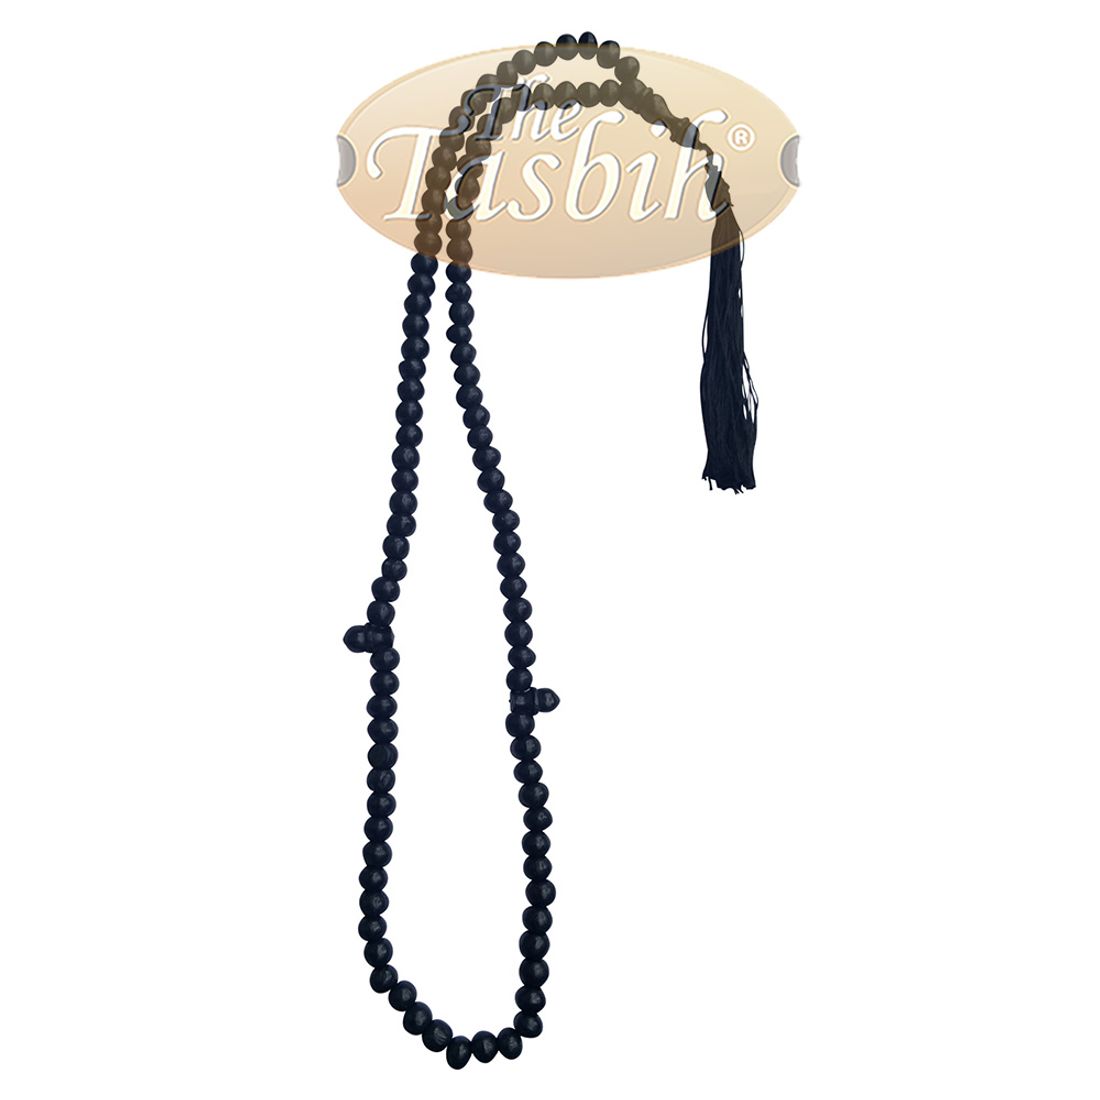 Low-price Handcrafted Black Rustic Coffee Wood Tasbih Prayer Beads